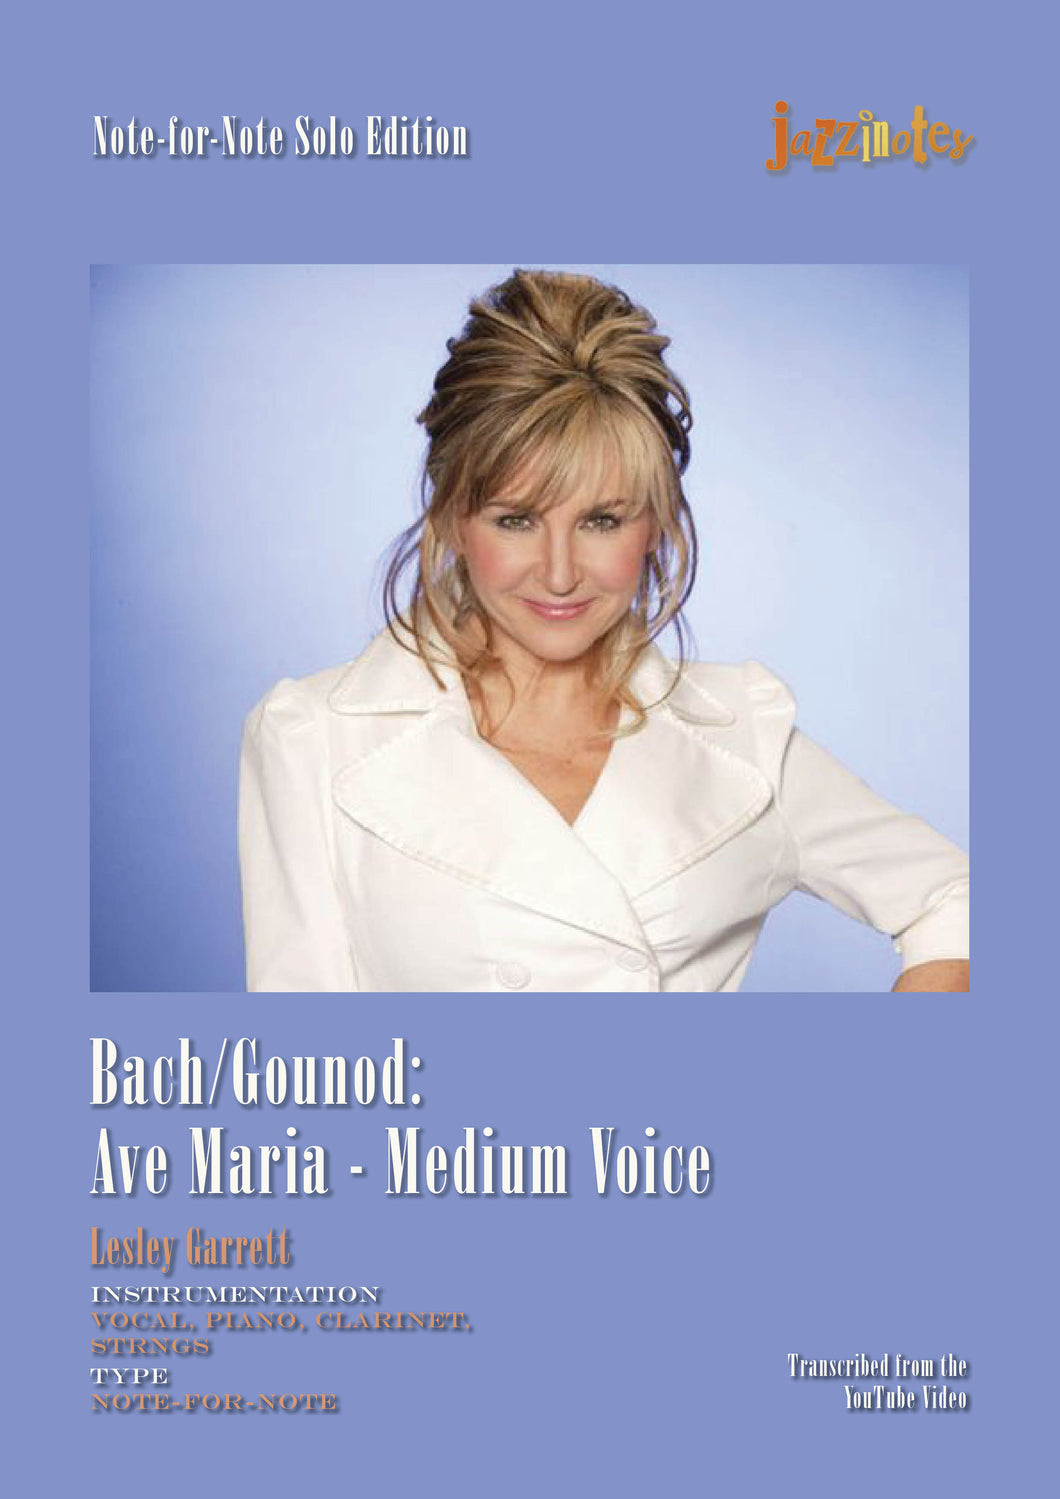 Bach/Gounod: Ave Maria (Lesley Garrett) - medium voice Eb major - Sheet Music Download